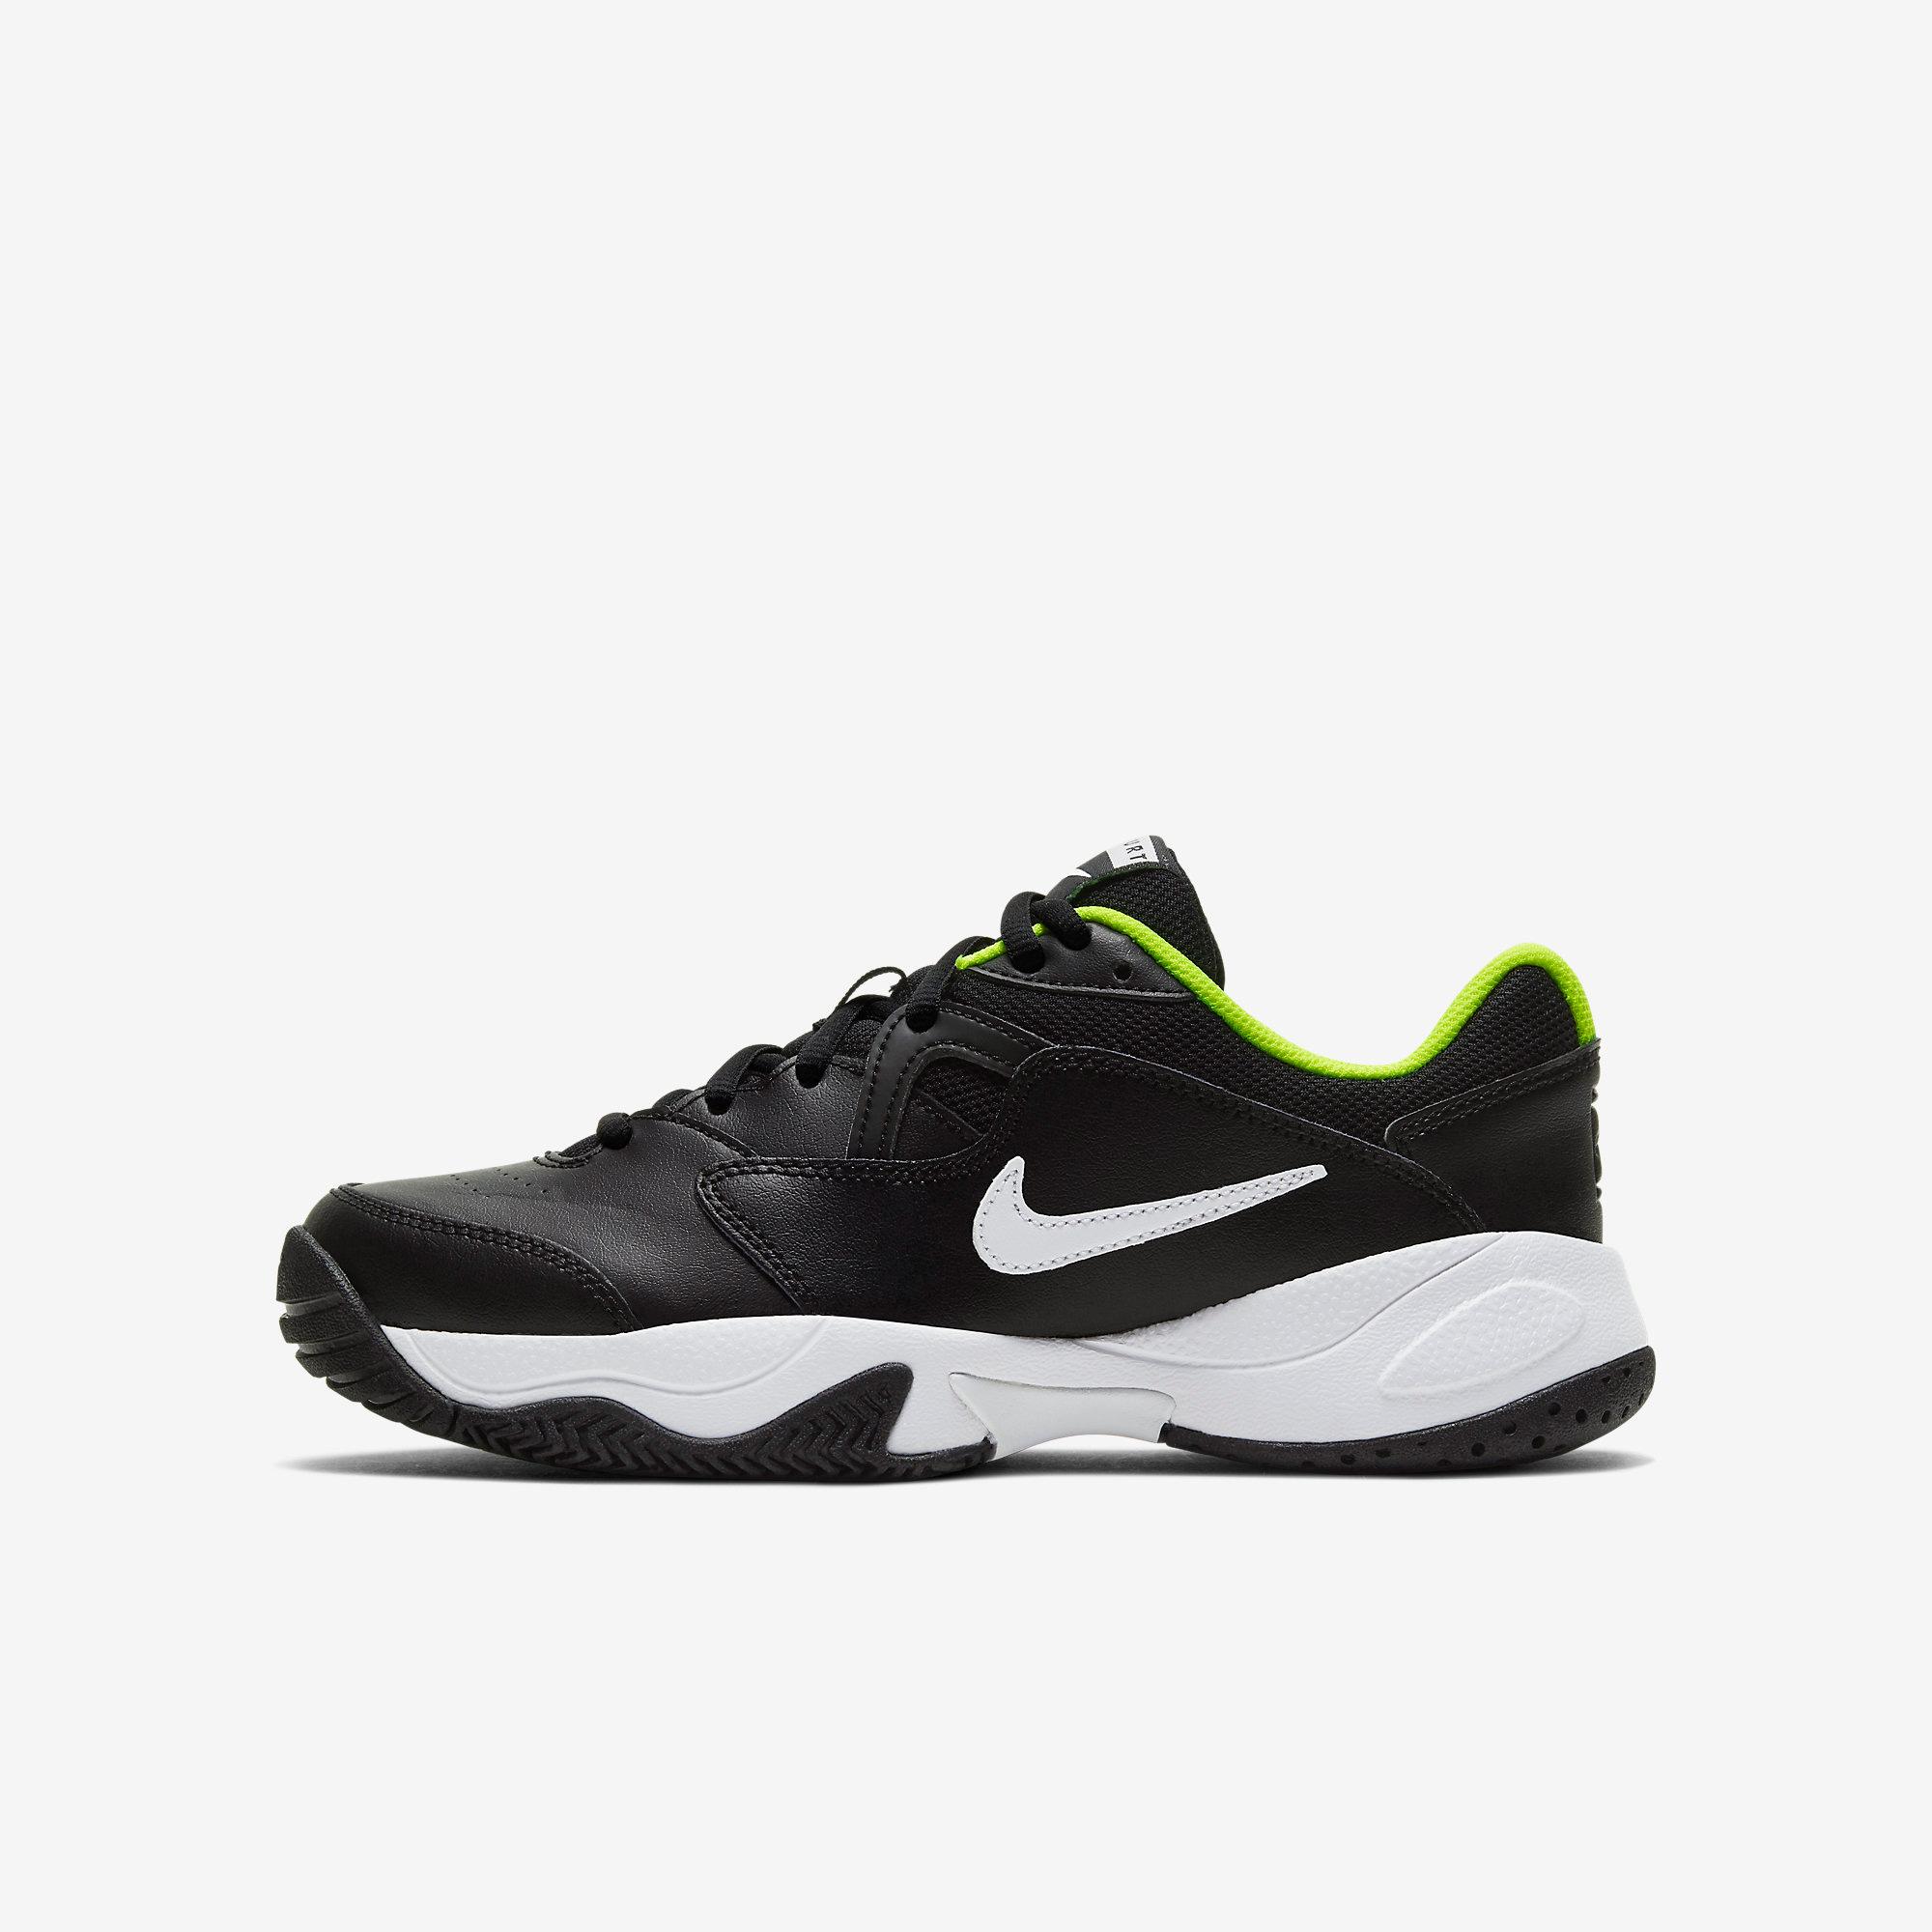 Nike Kids Lite 2 Tennis Shoes - Black/Volt - Tennisnuts.com